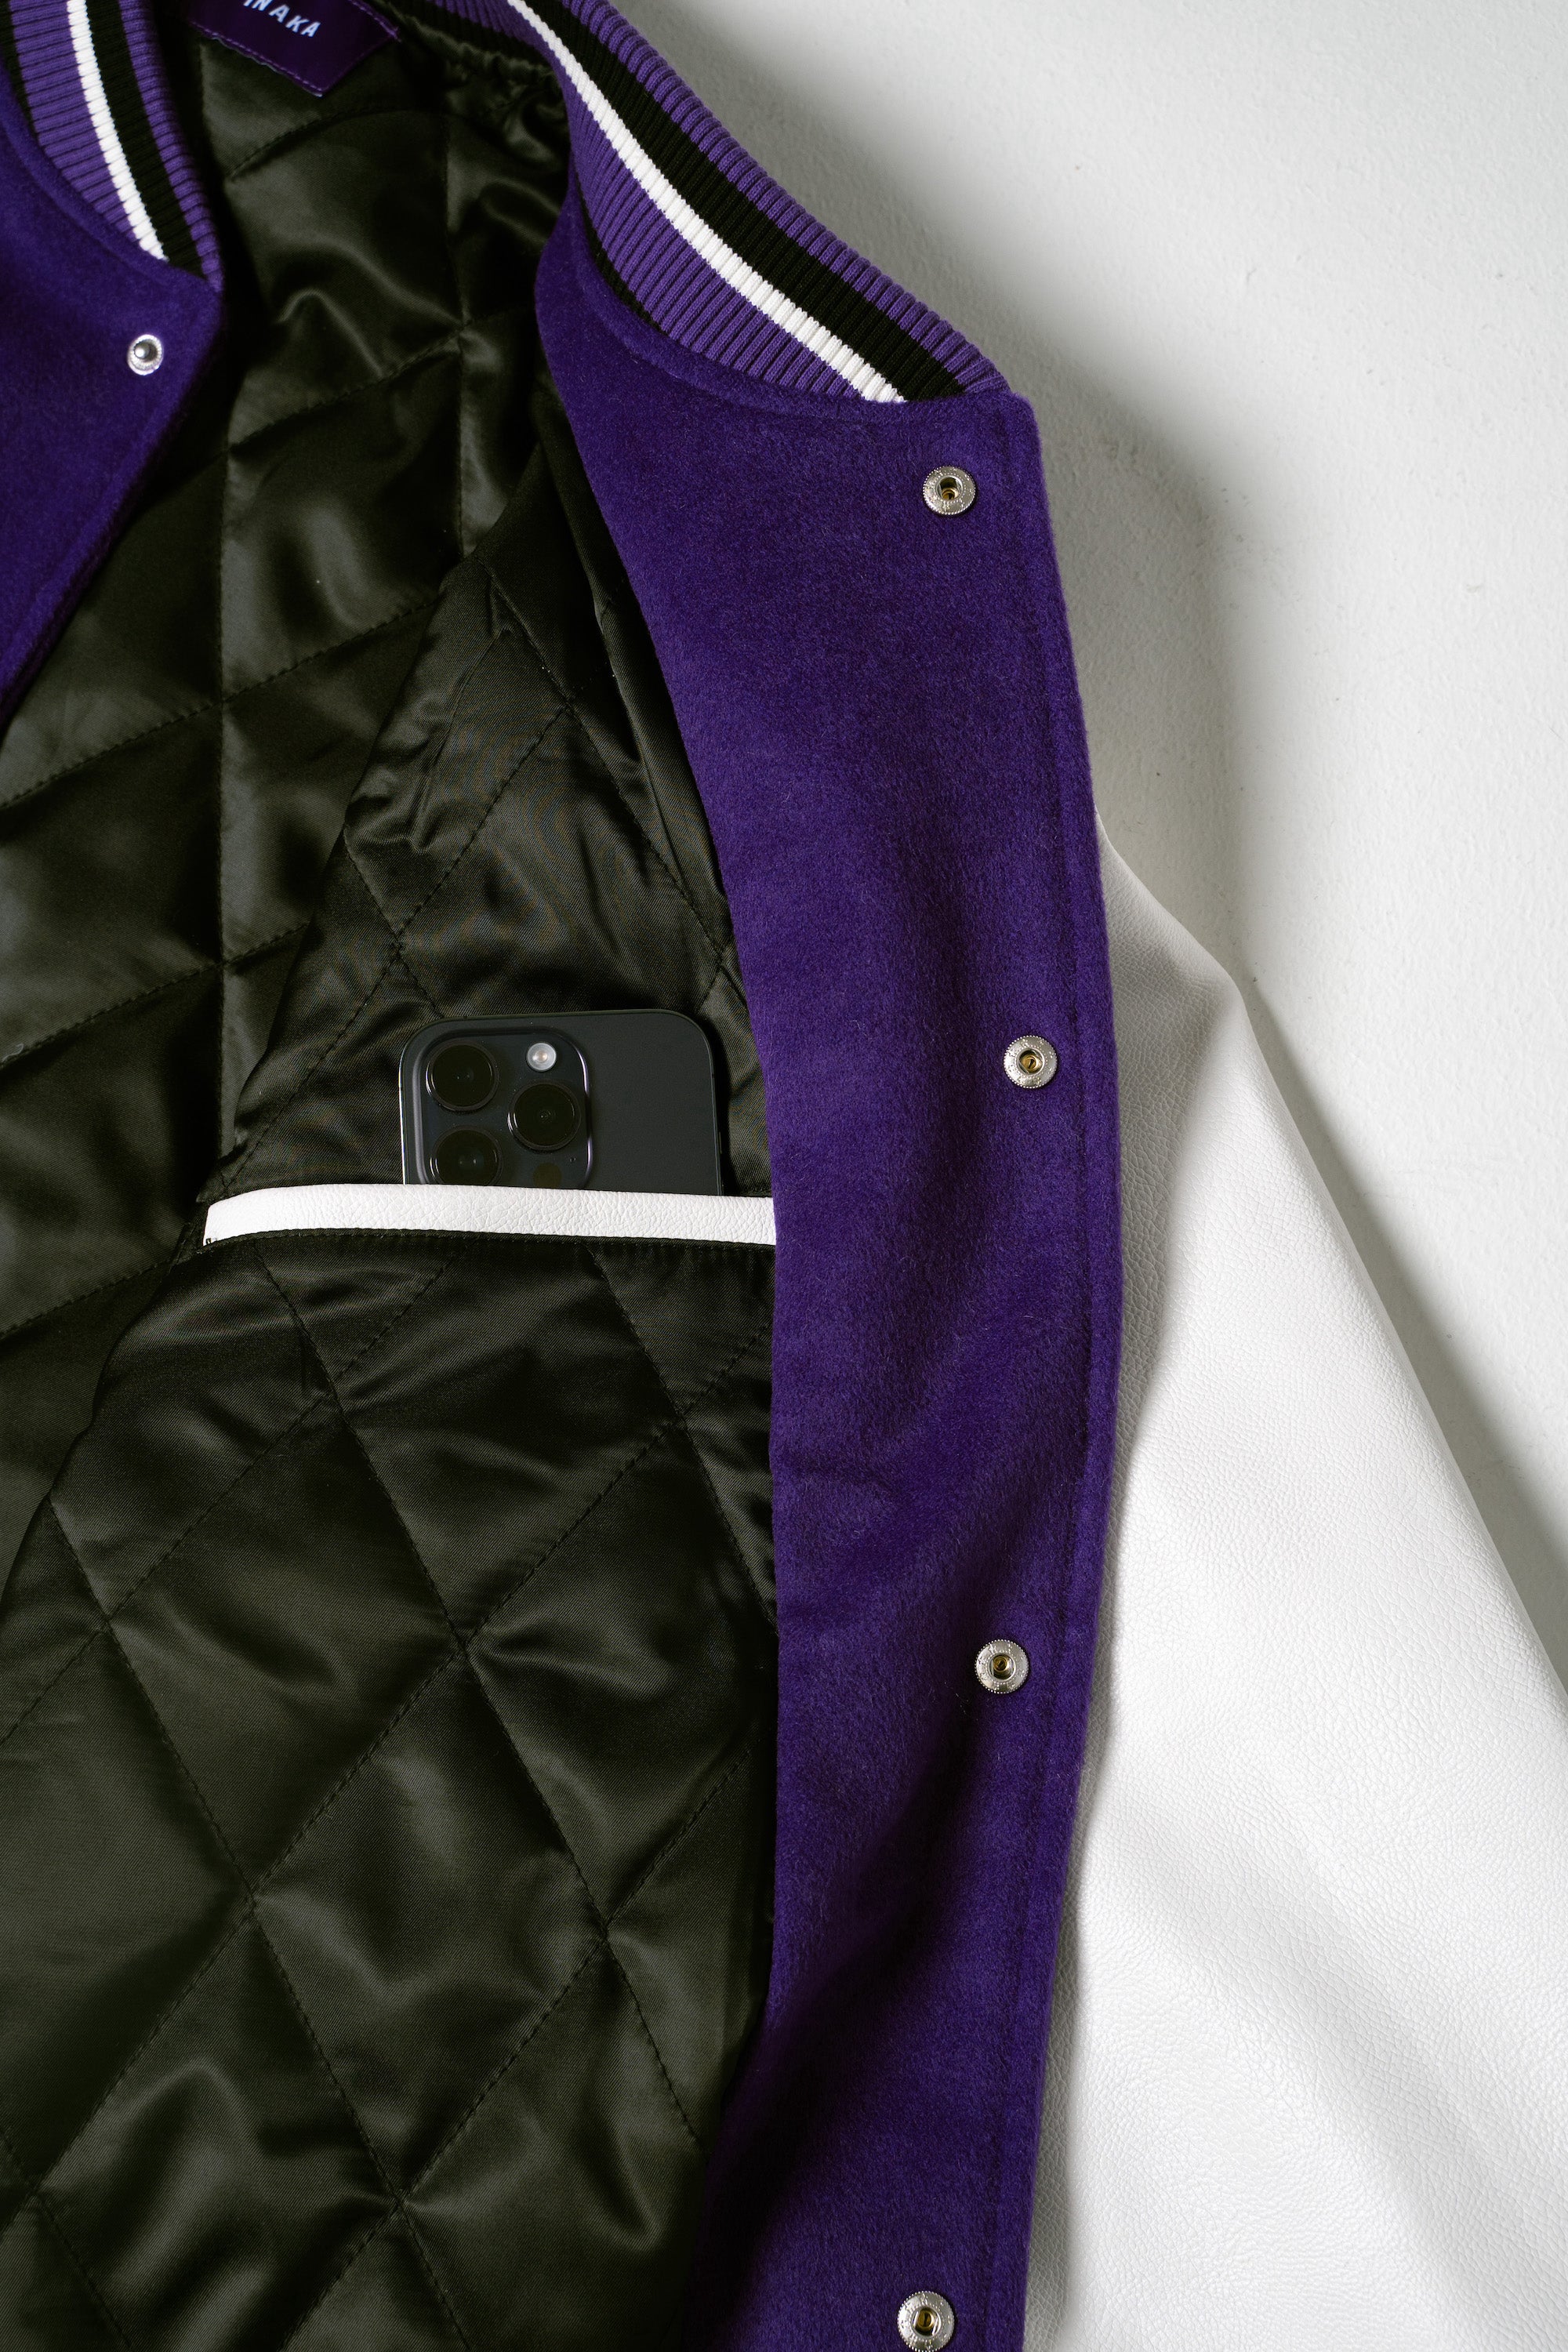 Inaka Power Men's 4 Year Letterman Jacket - Purple/White - L - Oversized Fit Jacket w/ 2 Side Pockets - Faux Leather, Cotton Fleece, Polyester Satin Blend - Inaka Power